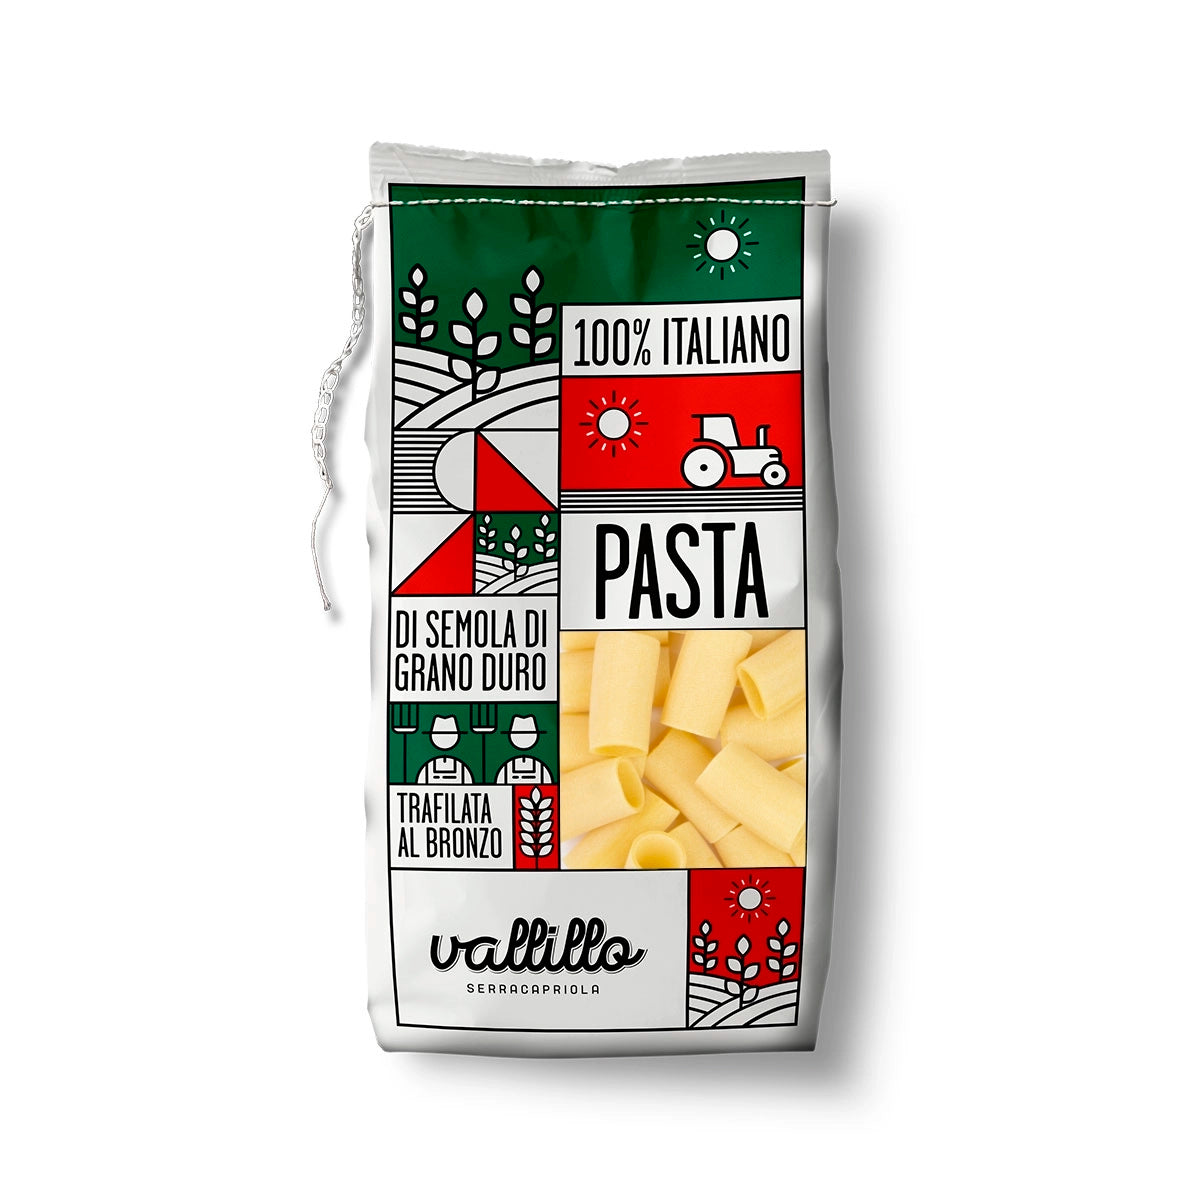 Paccheri - 100% Italian artisanal pasta